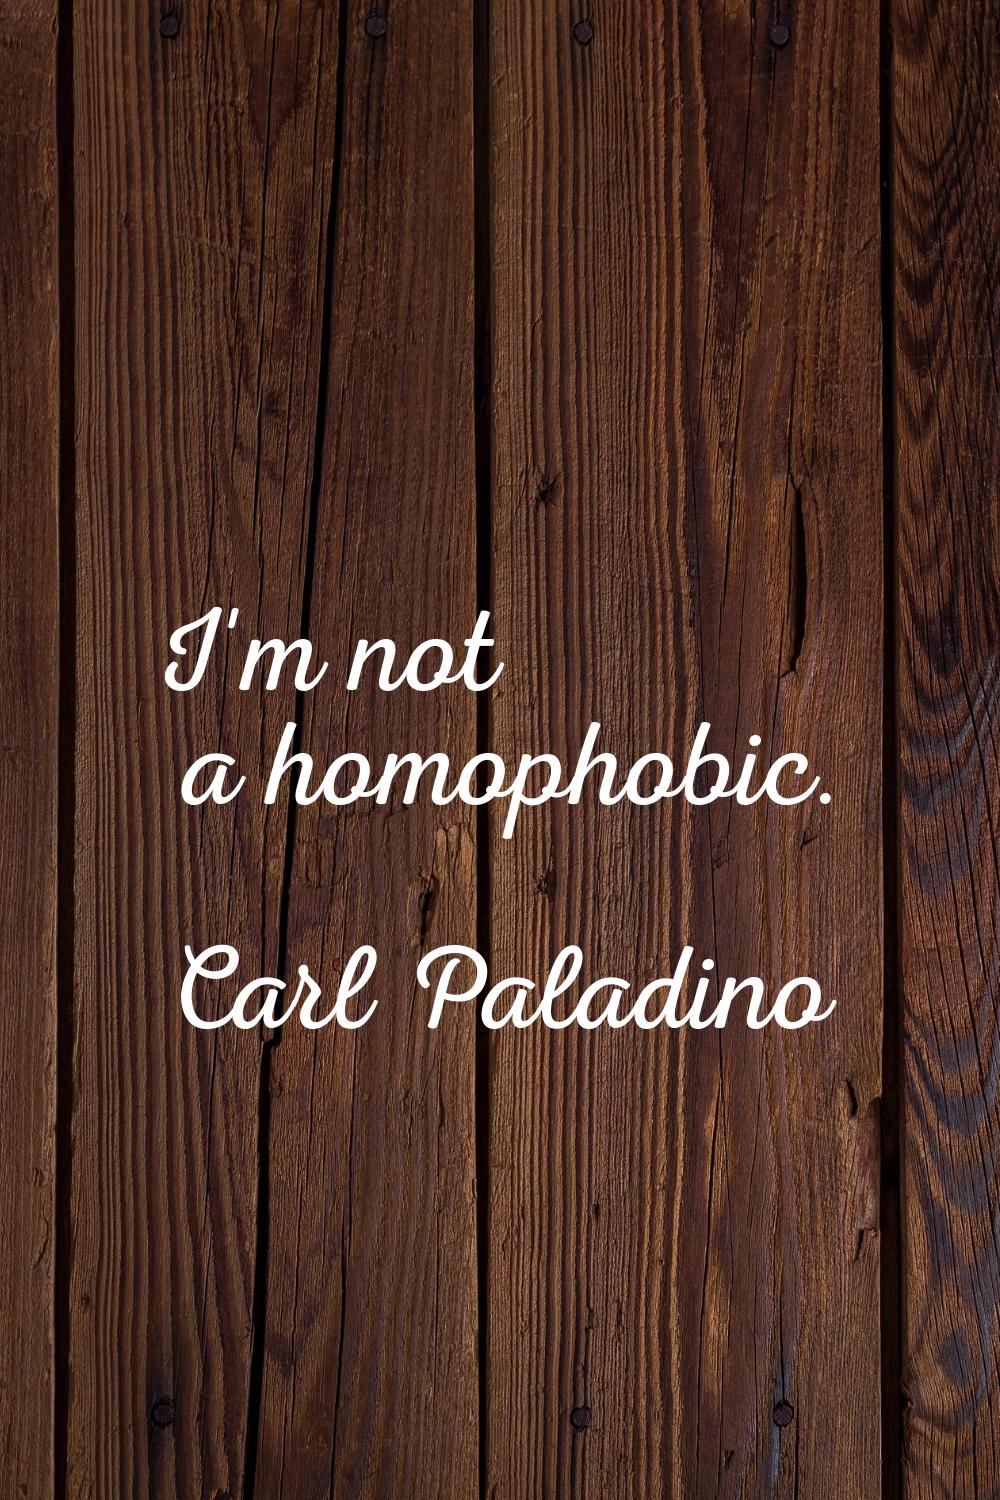 I'm not a homophobic.